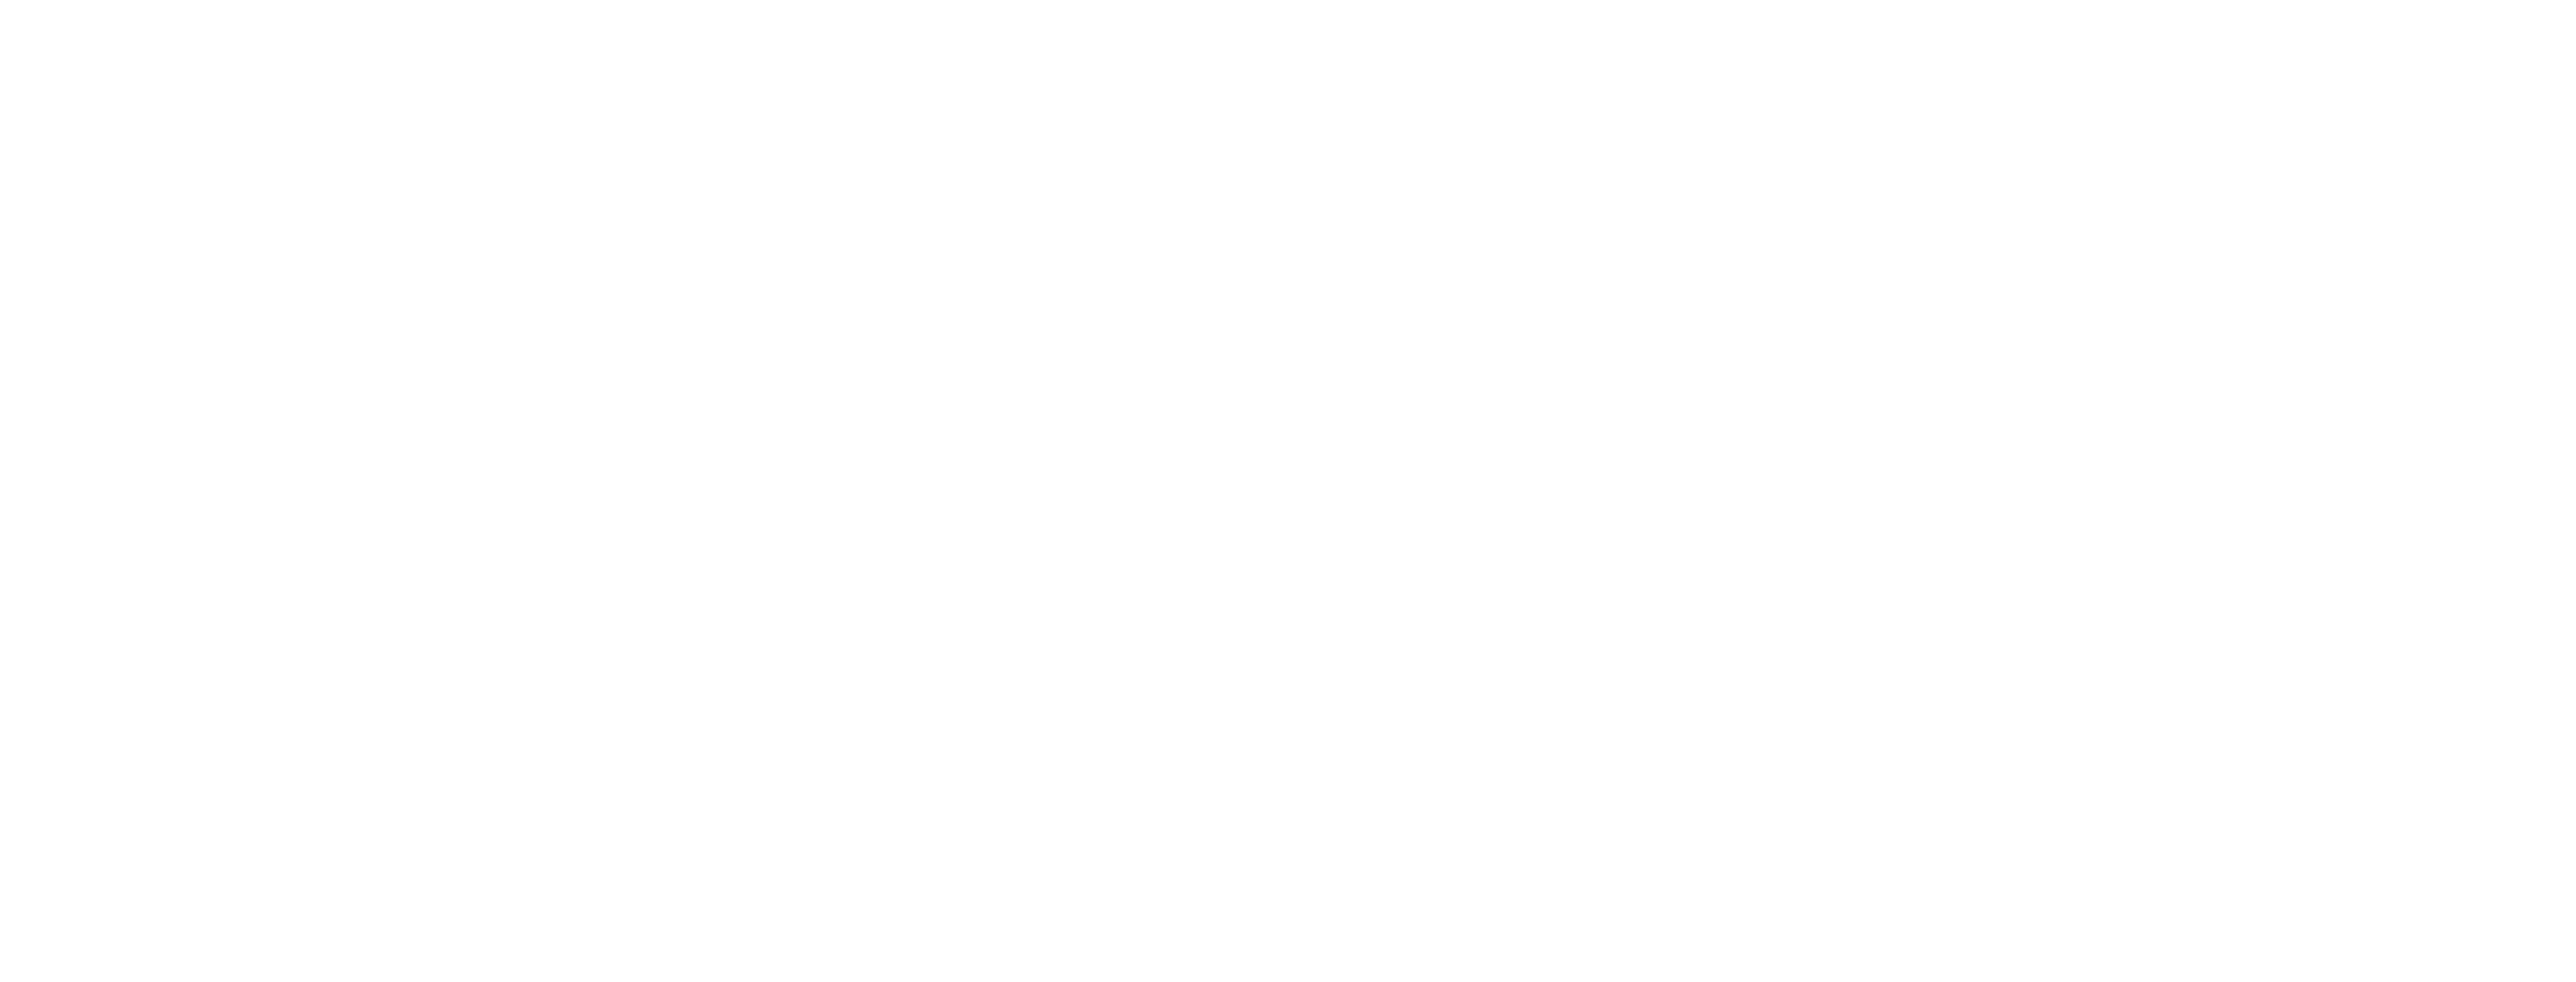 Aserradora San Judas Tadeo